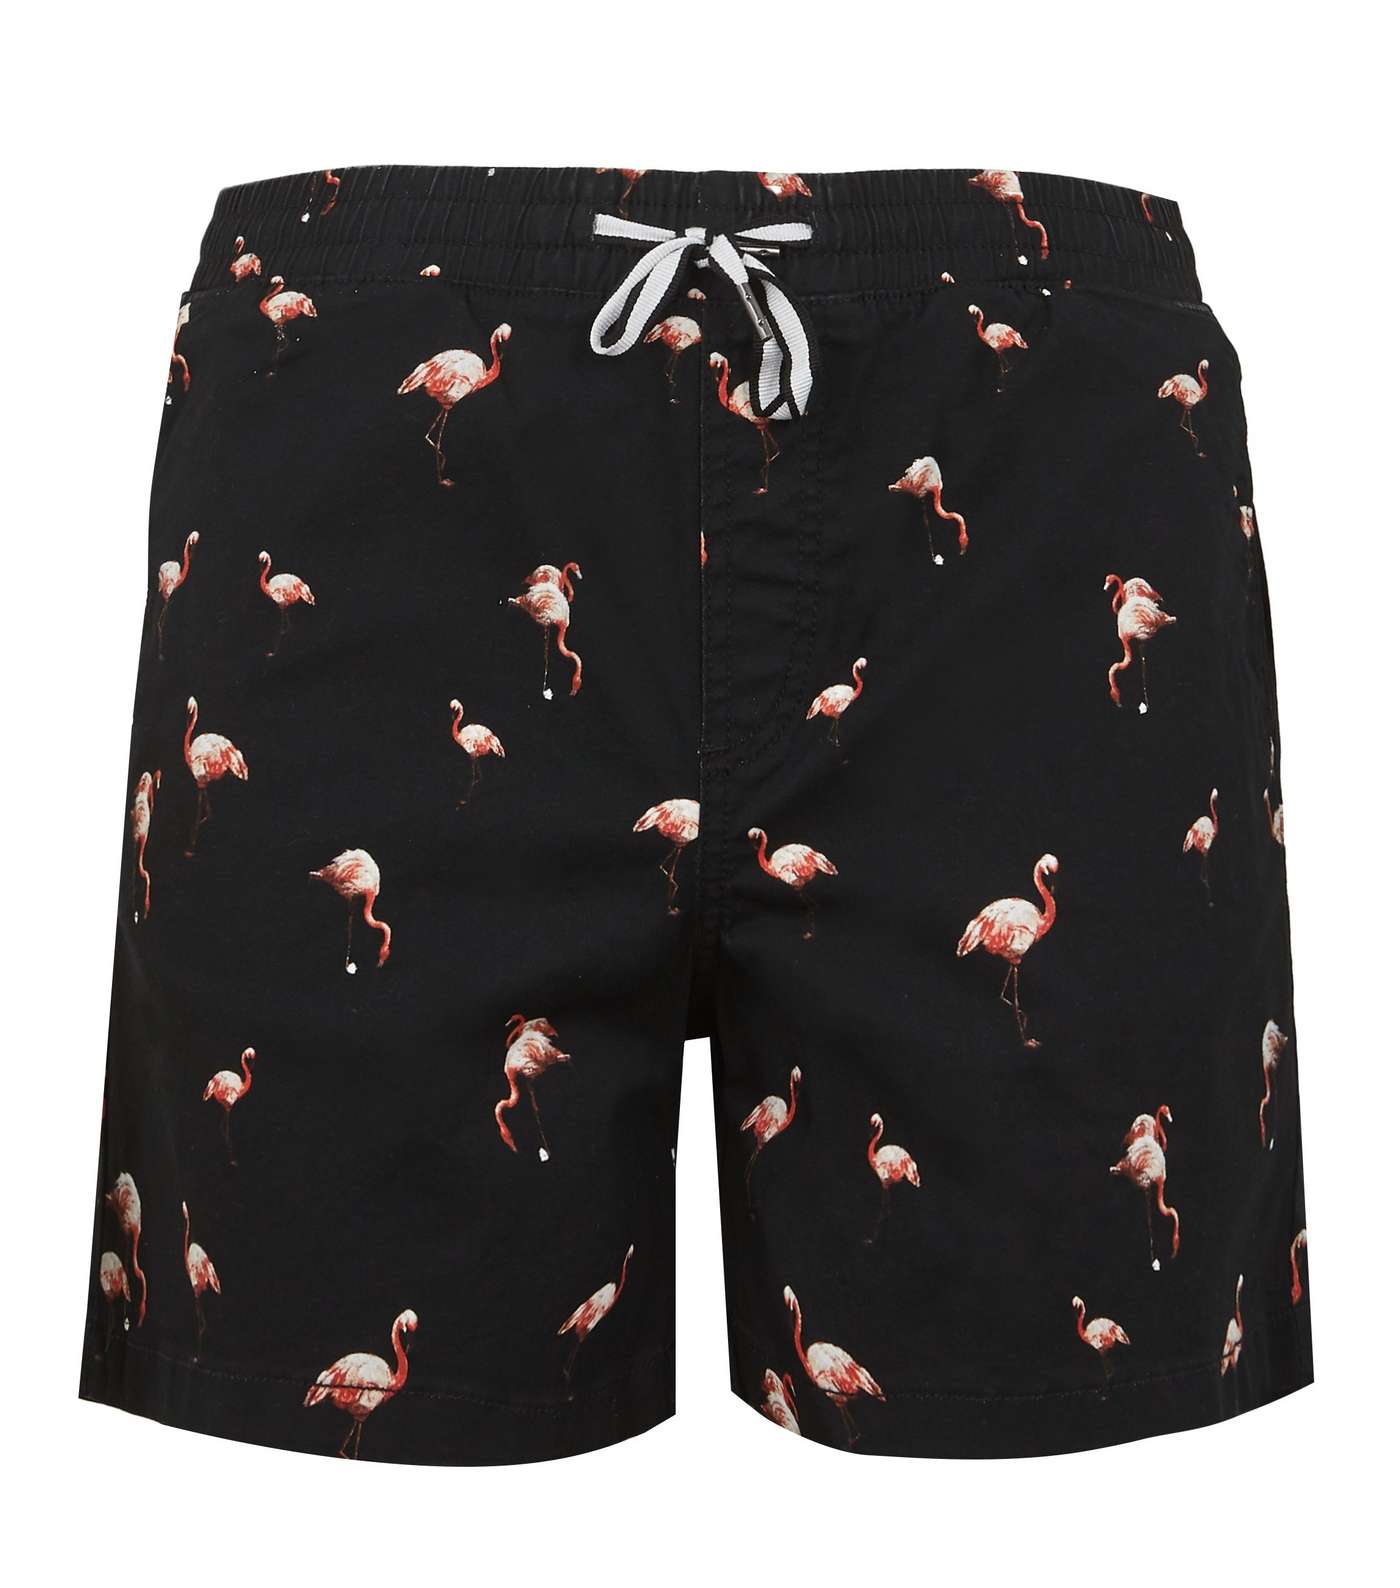 Jack & Jones Black Flamingo Swim Shorts